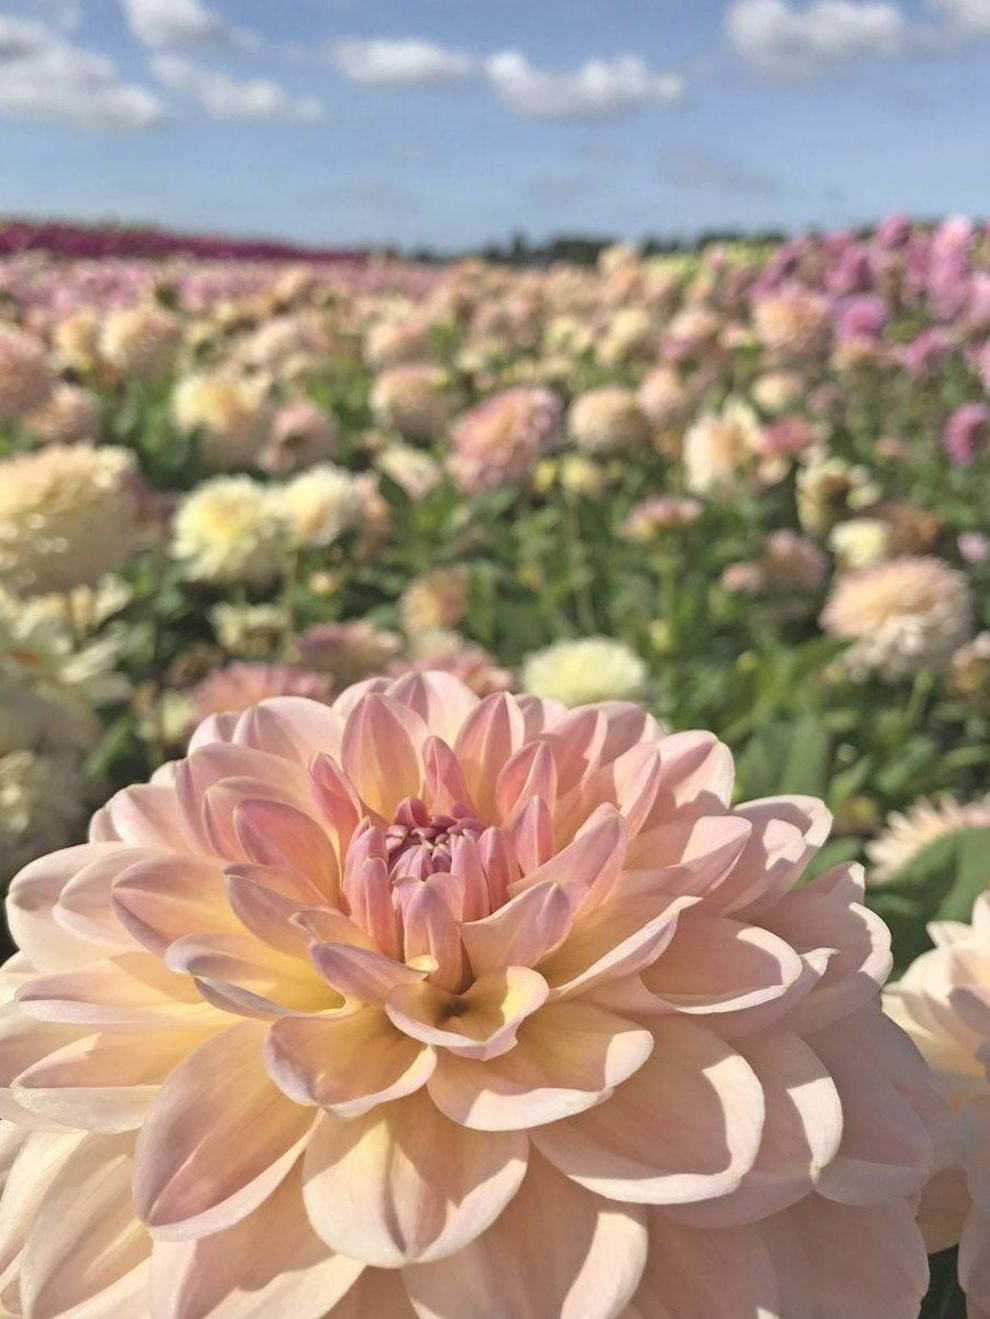 Dahlia Flower Field Background